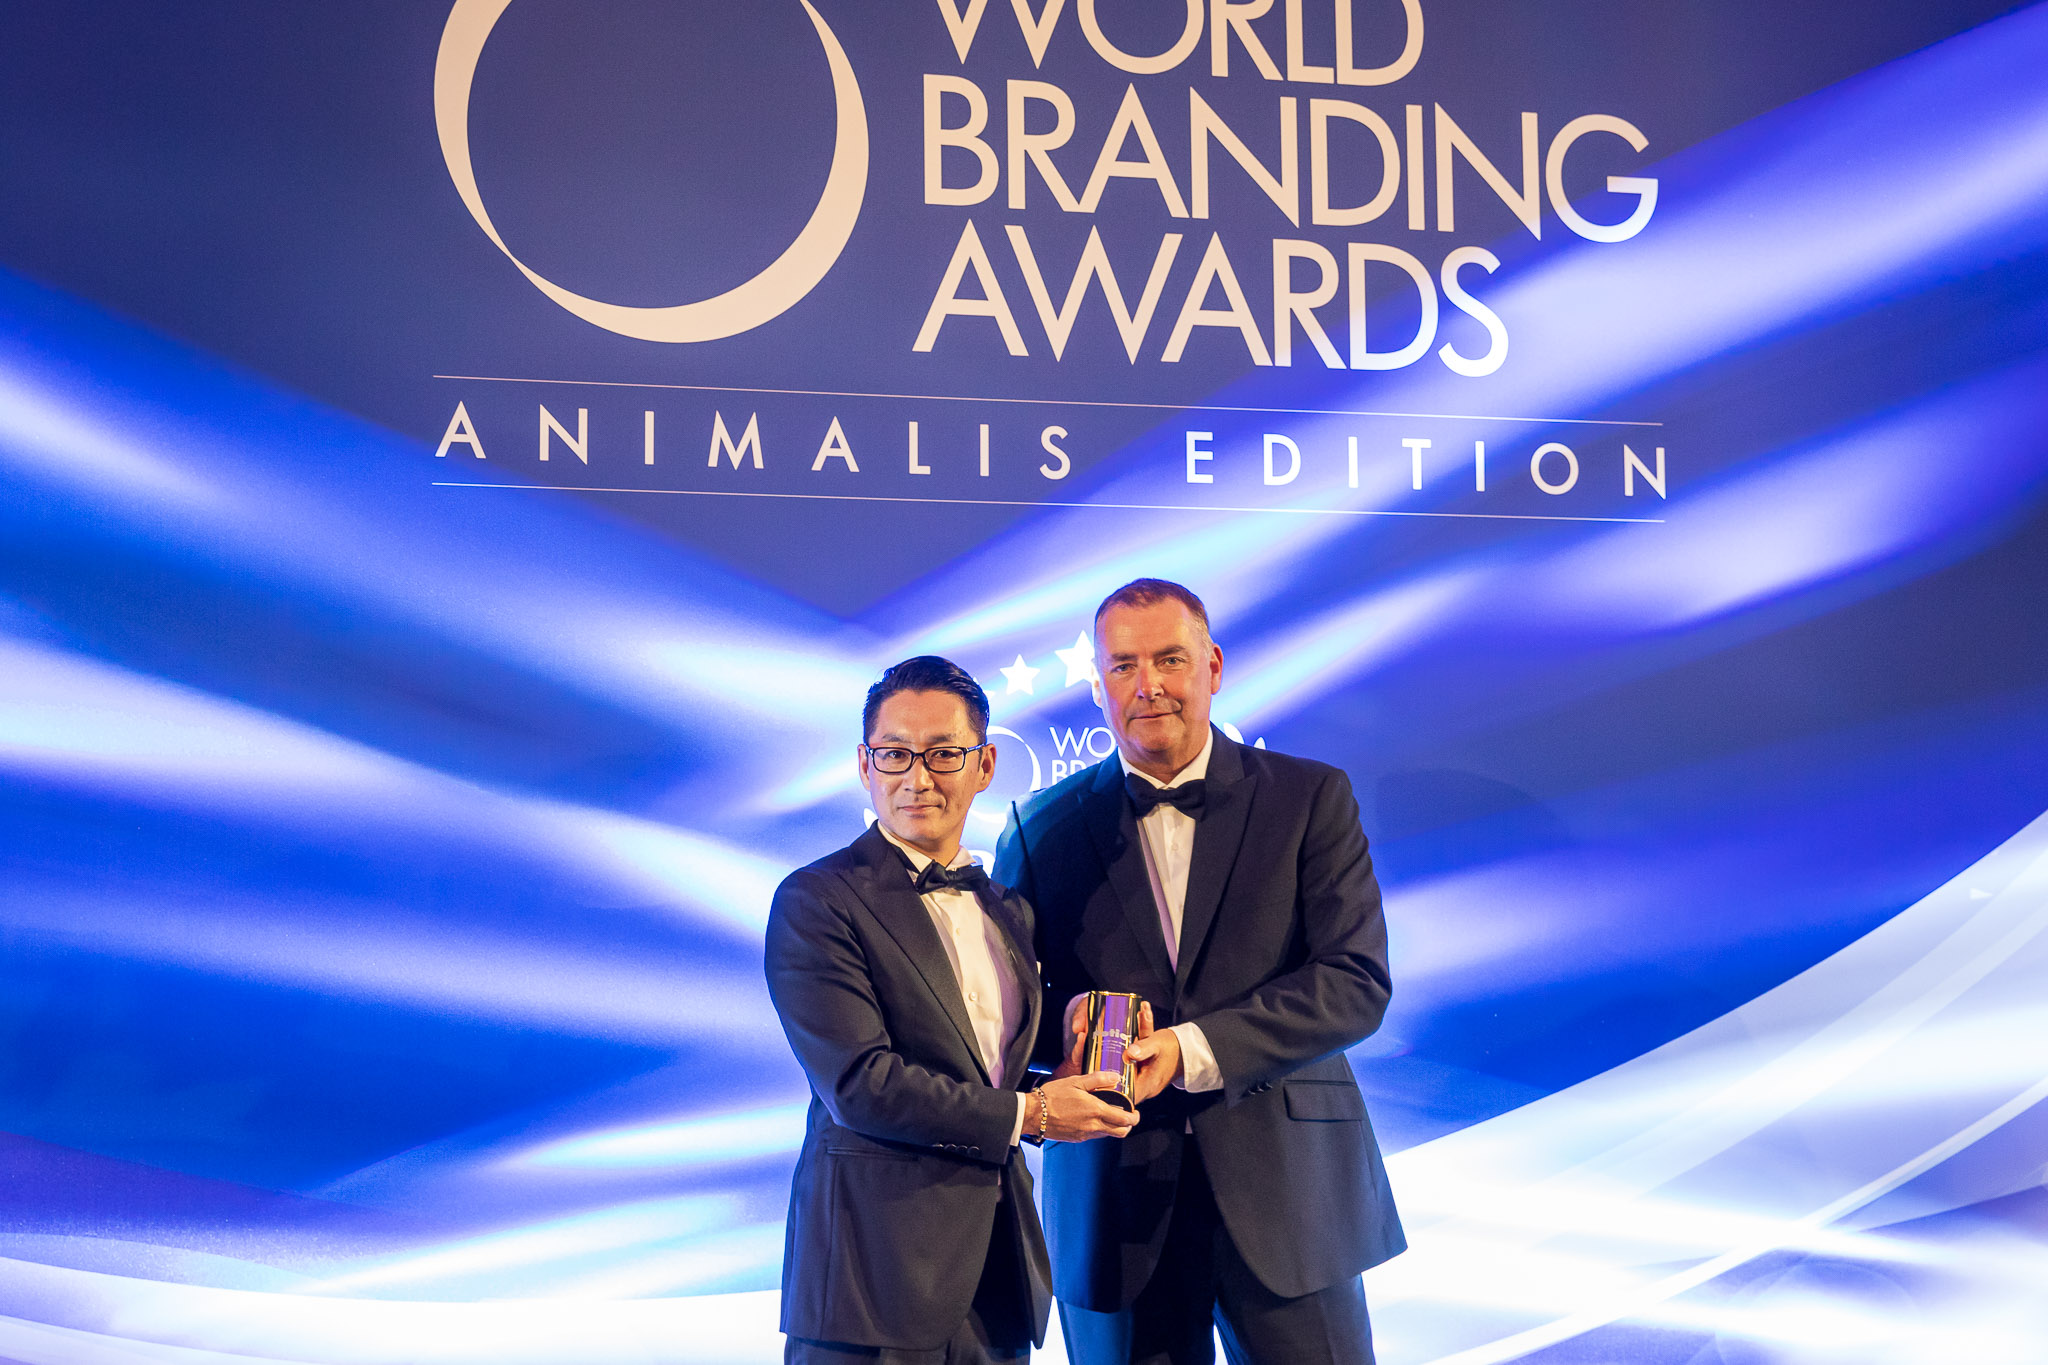 20190703_215938_world_branding_awards_animalis_5889